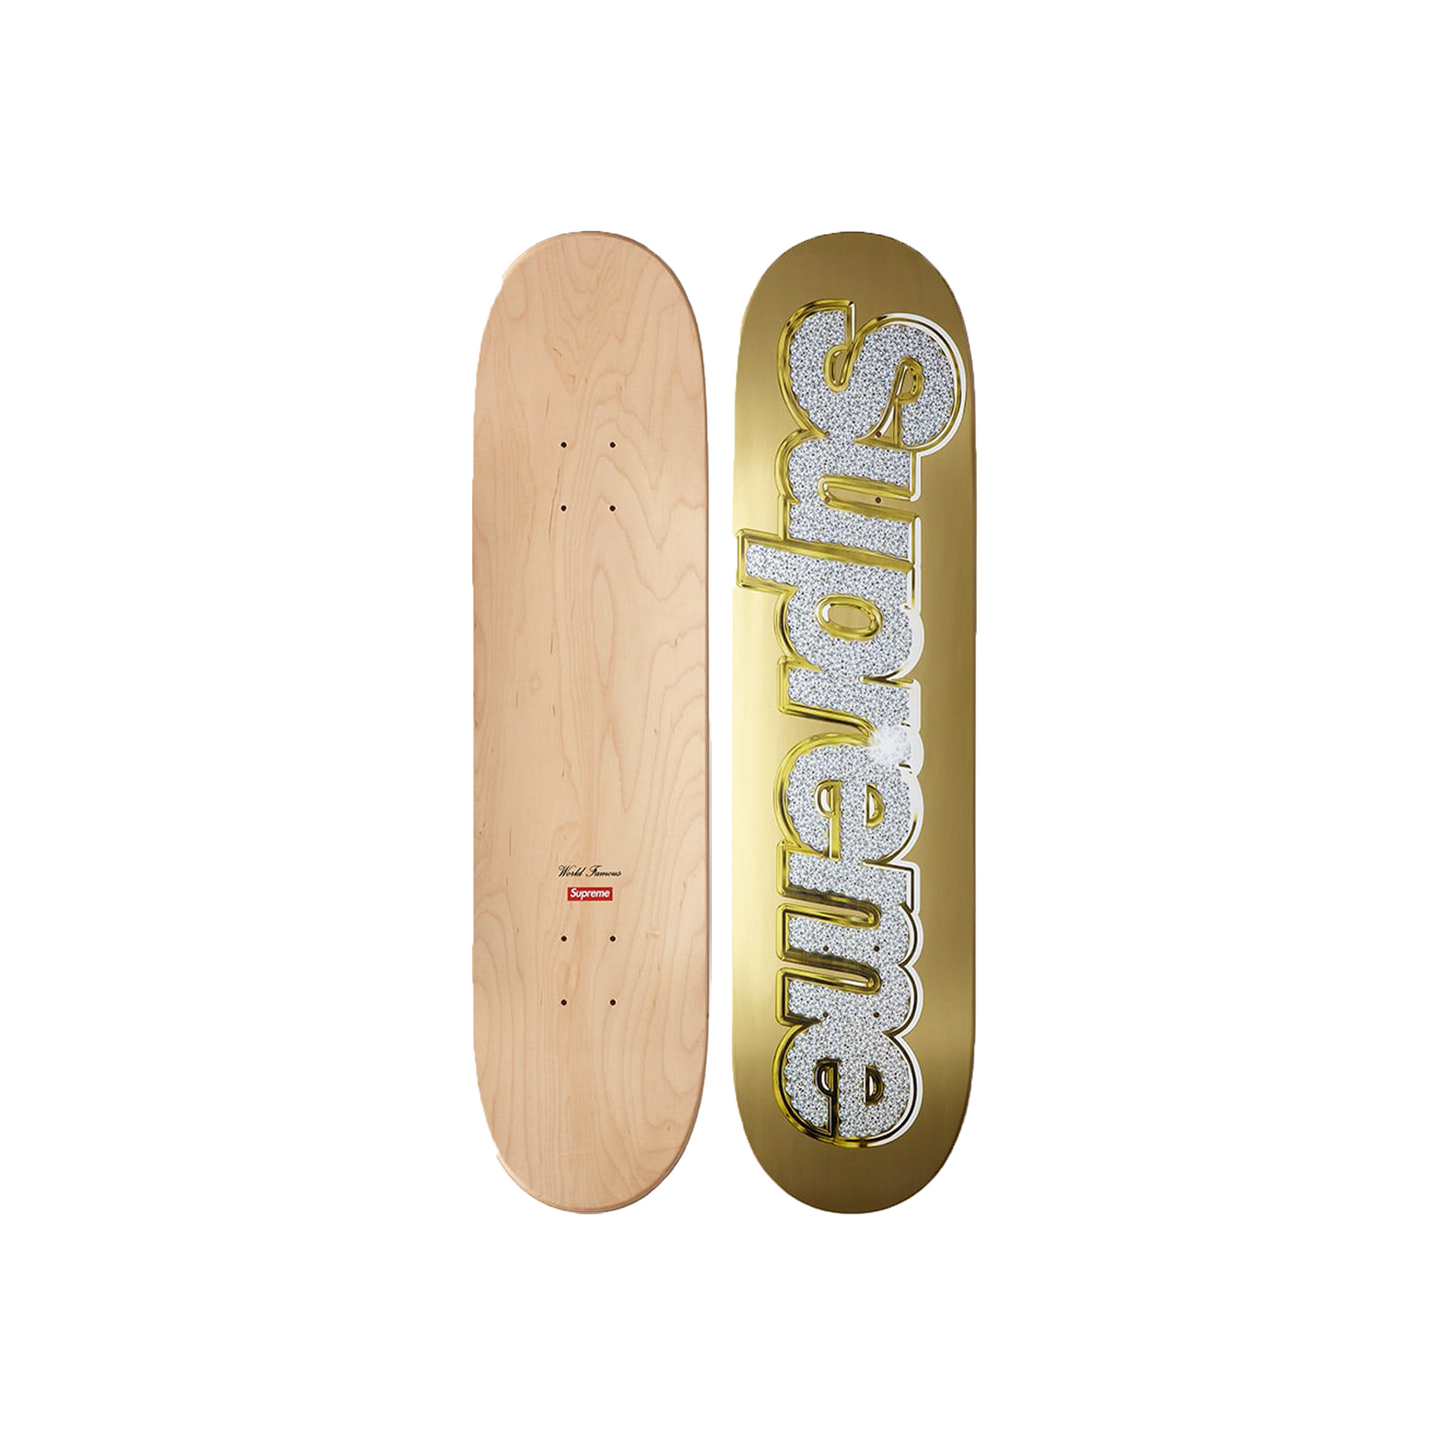 Supreme Bling Skateboard Gold